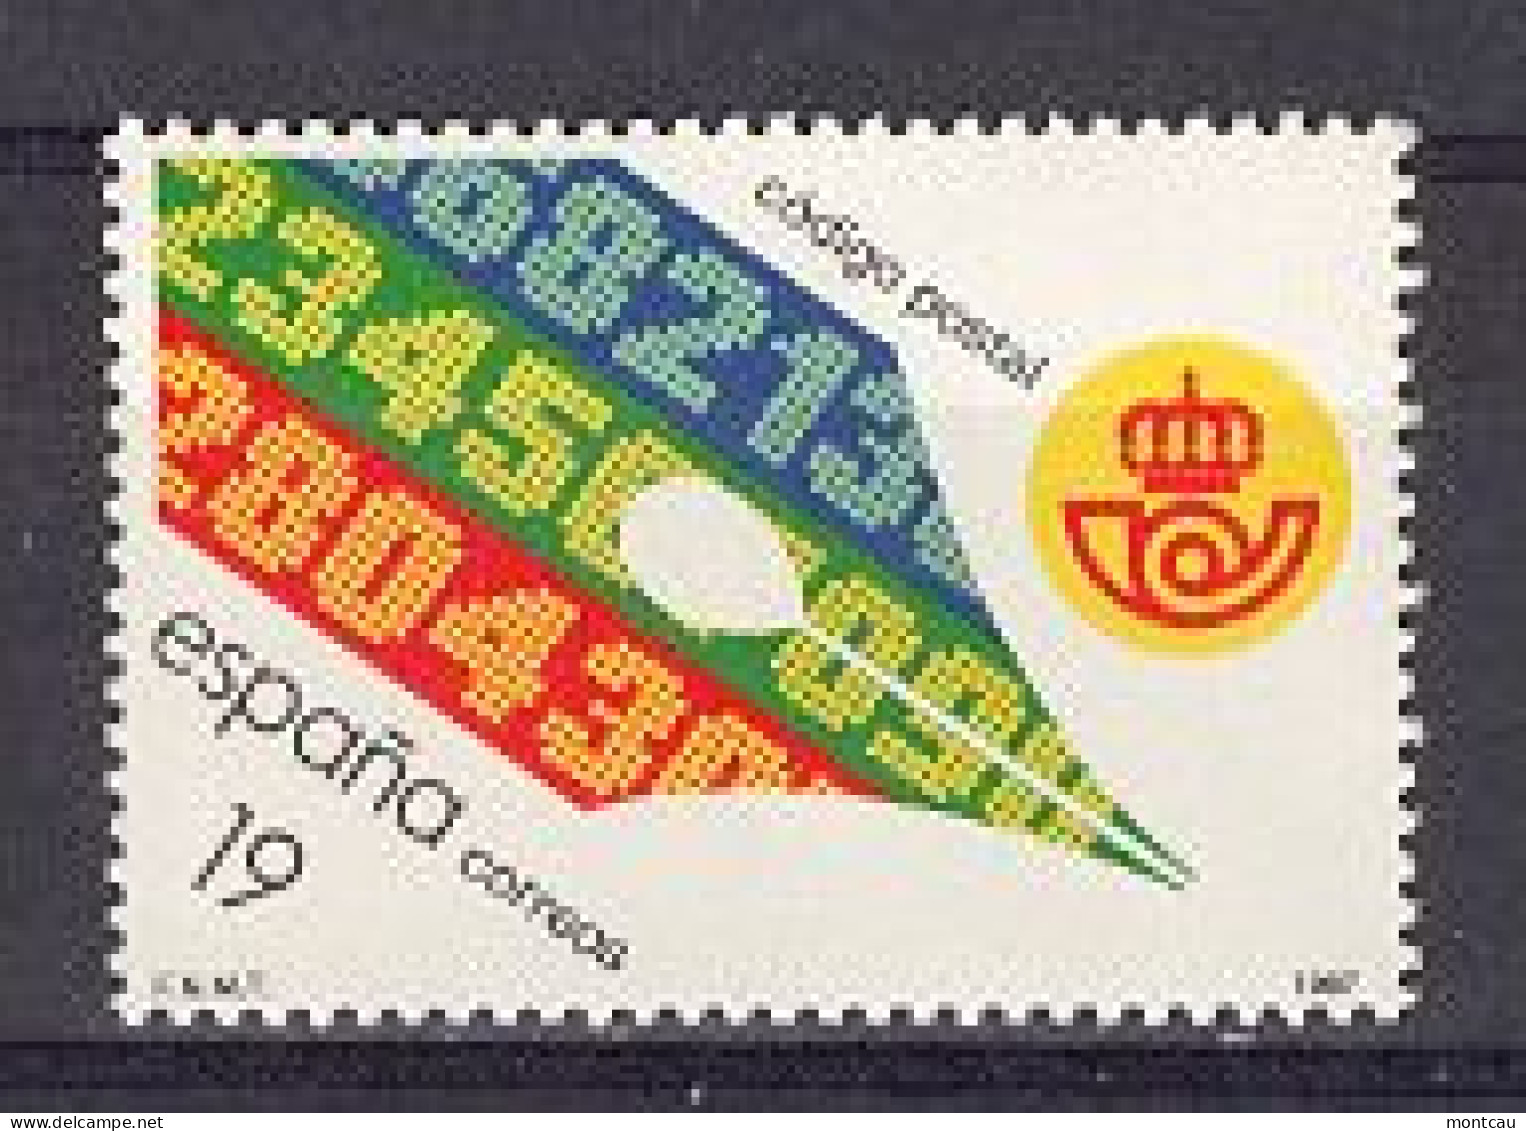 Spain 1987. Codigo Postal Ed 2906 (**) - Code Postal